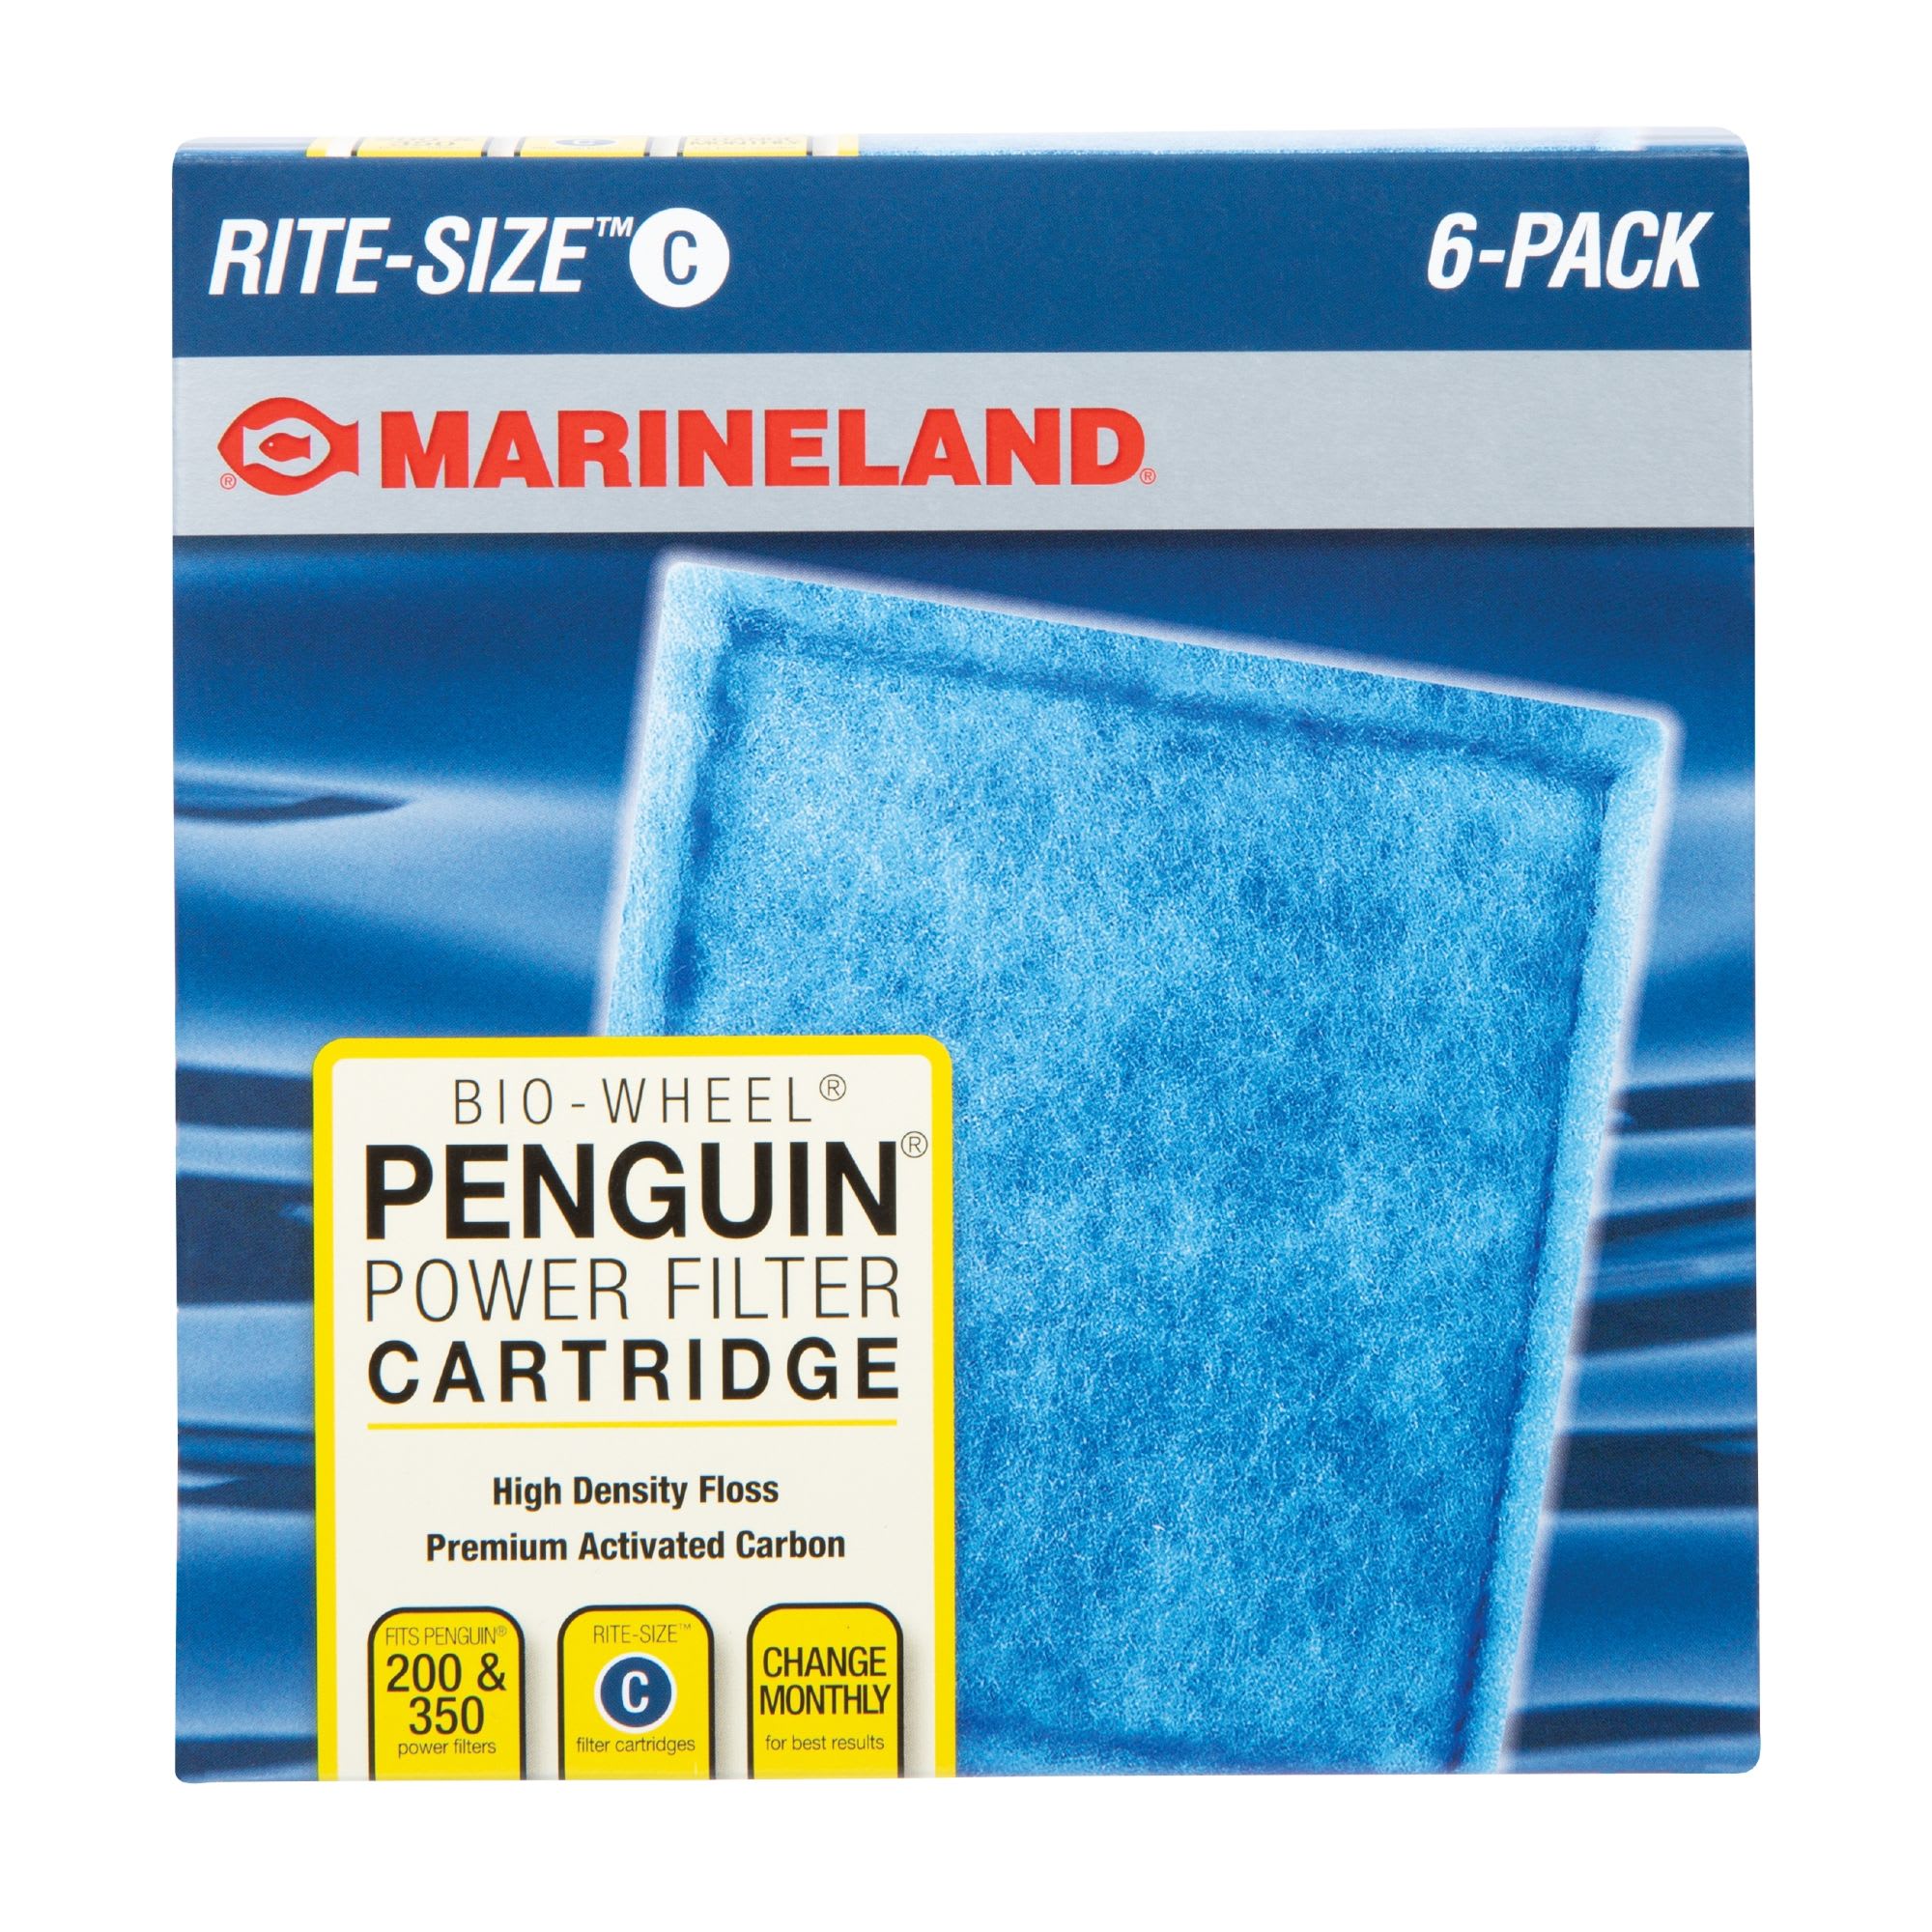 BULK BOX 24 Marineland Rite-Size C Cartridge for Penguin 170/200/330/350 